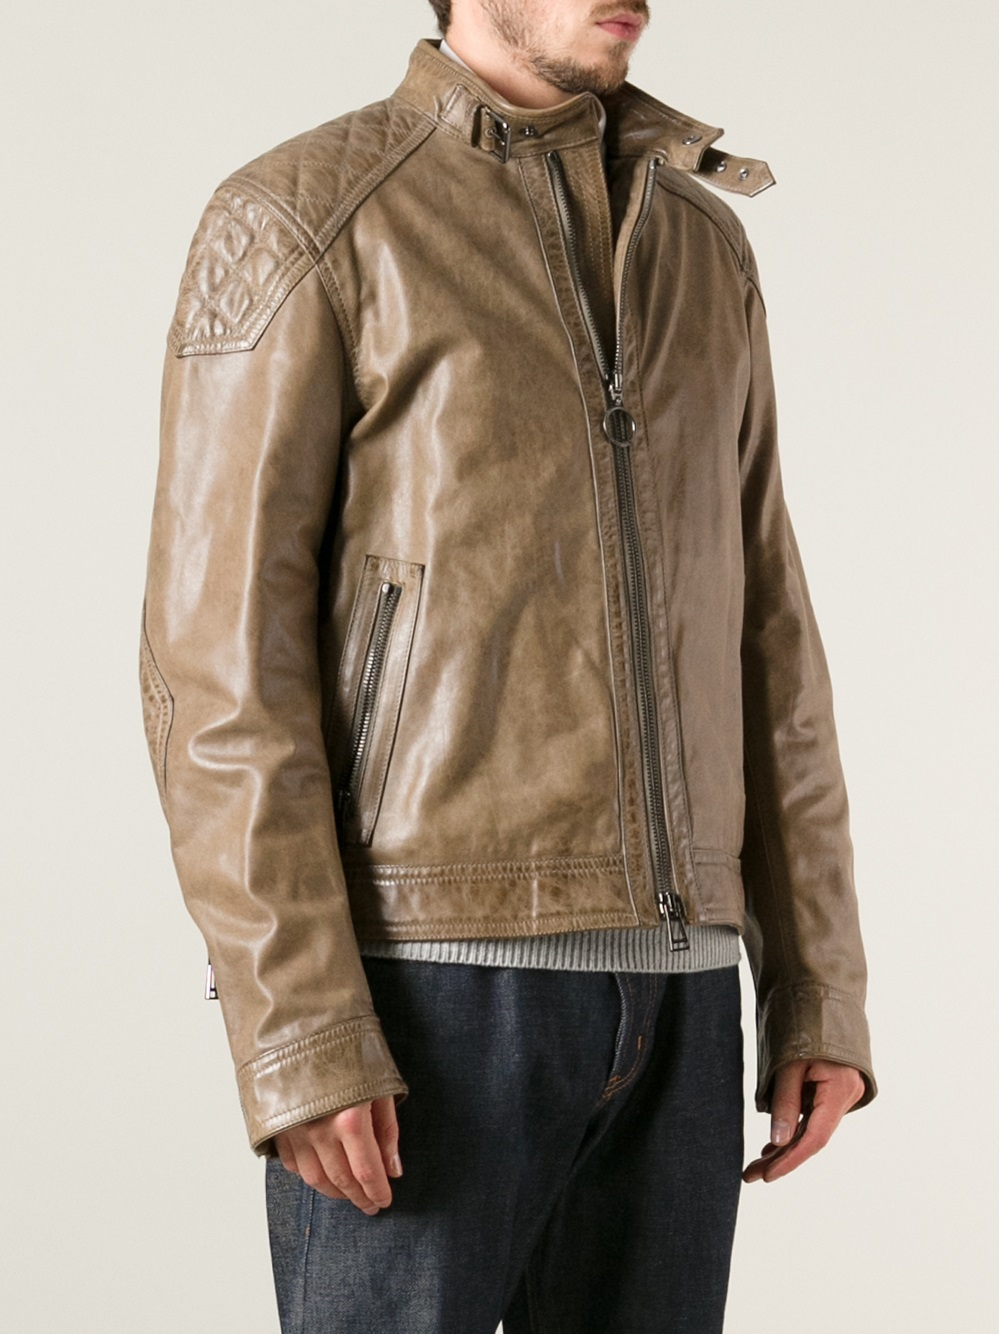 Lyst - Belstaff Leather Jacket in Natural for Men